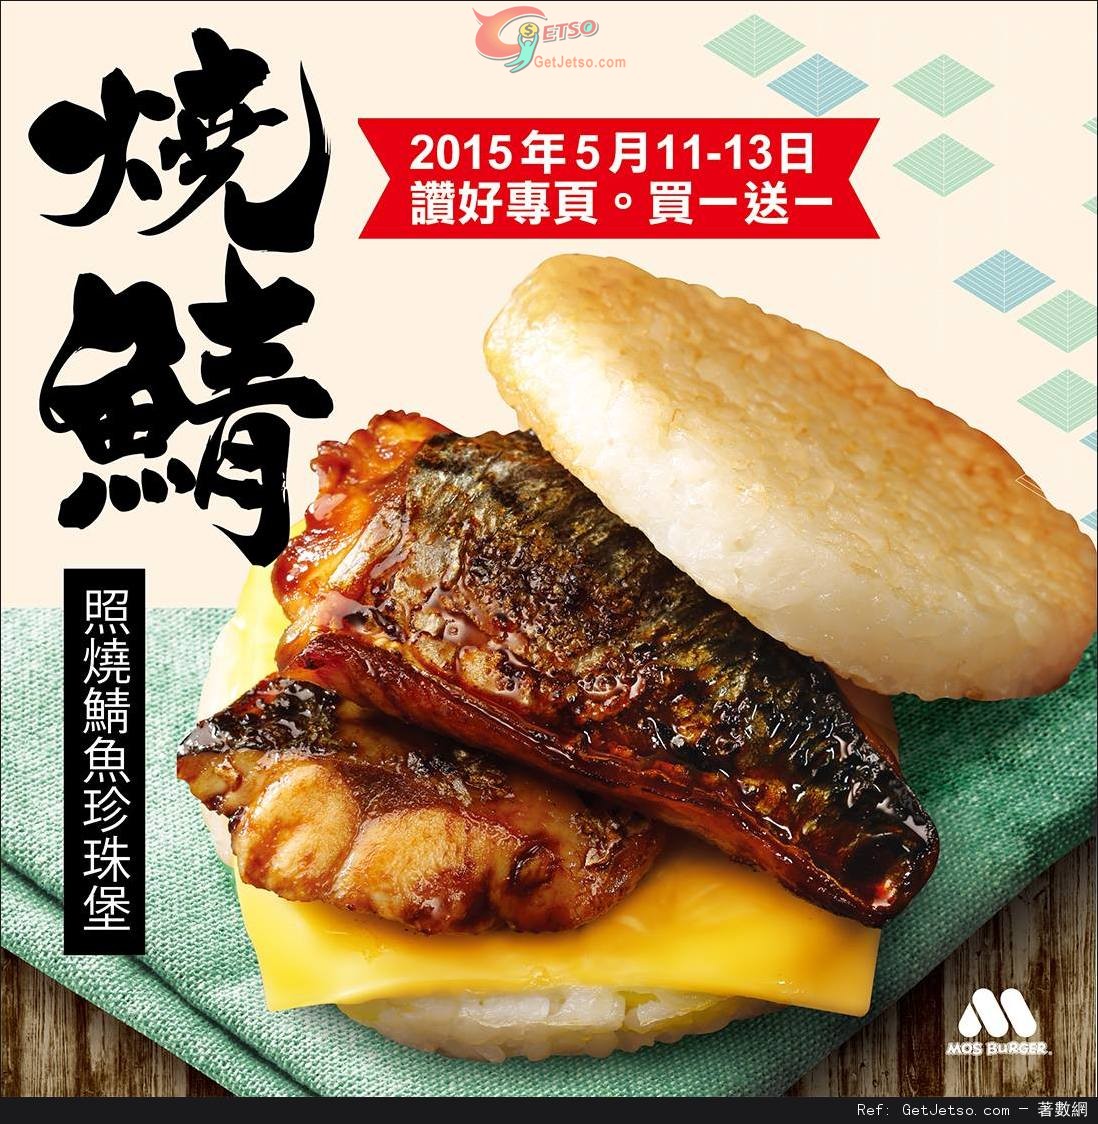 MOS Burger 照燒鯖魚珍珠堡買1送1優惠(至15年5月13日)圖片1